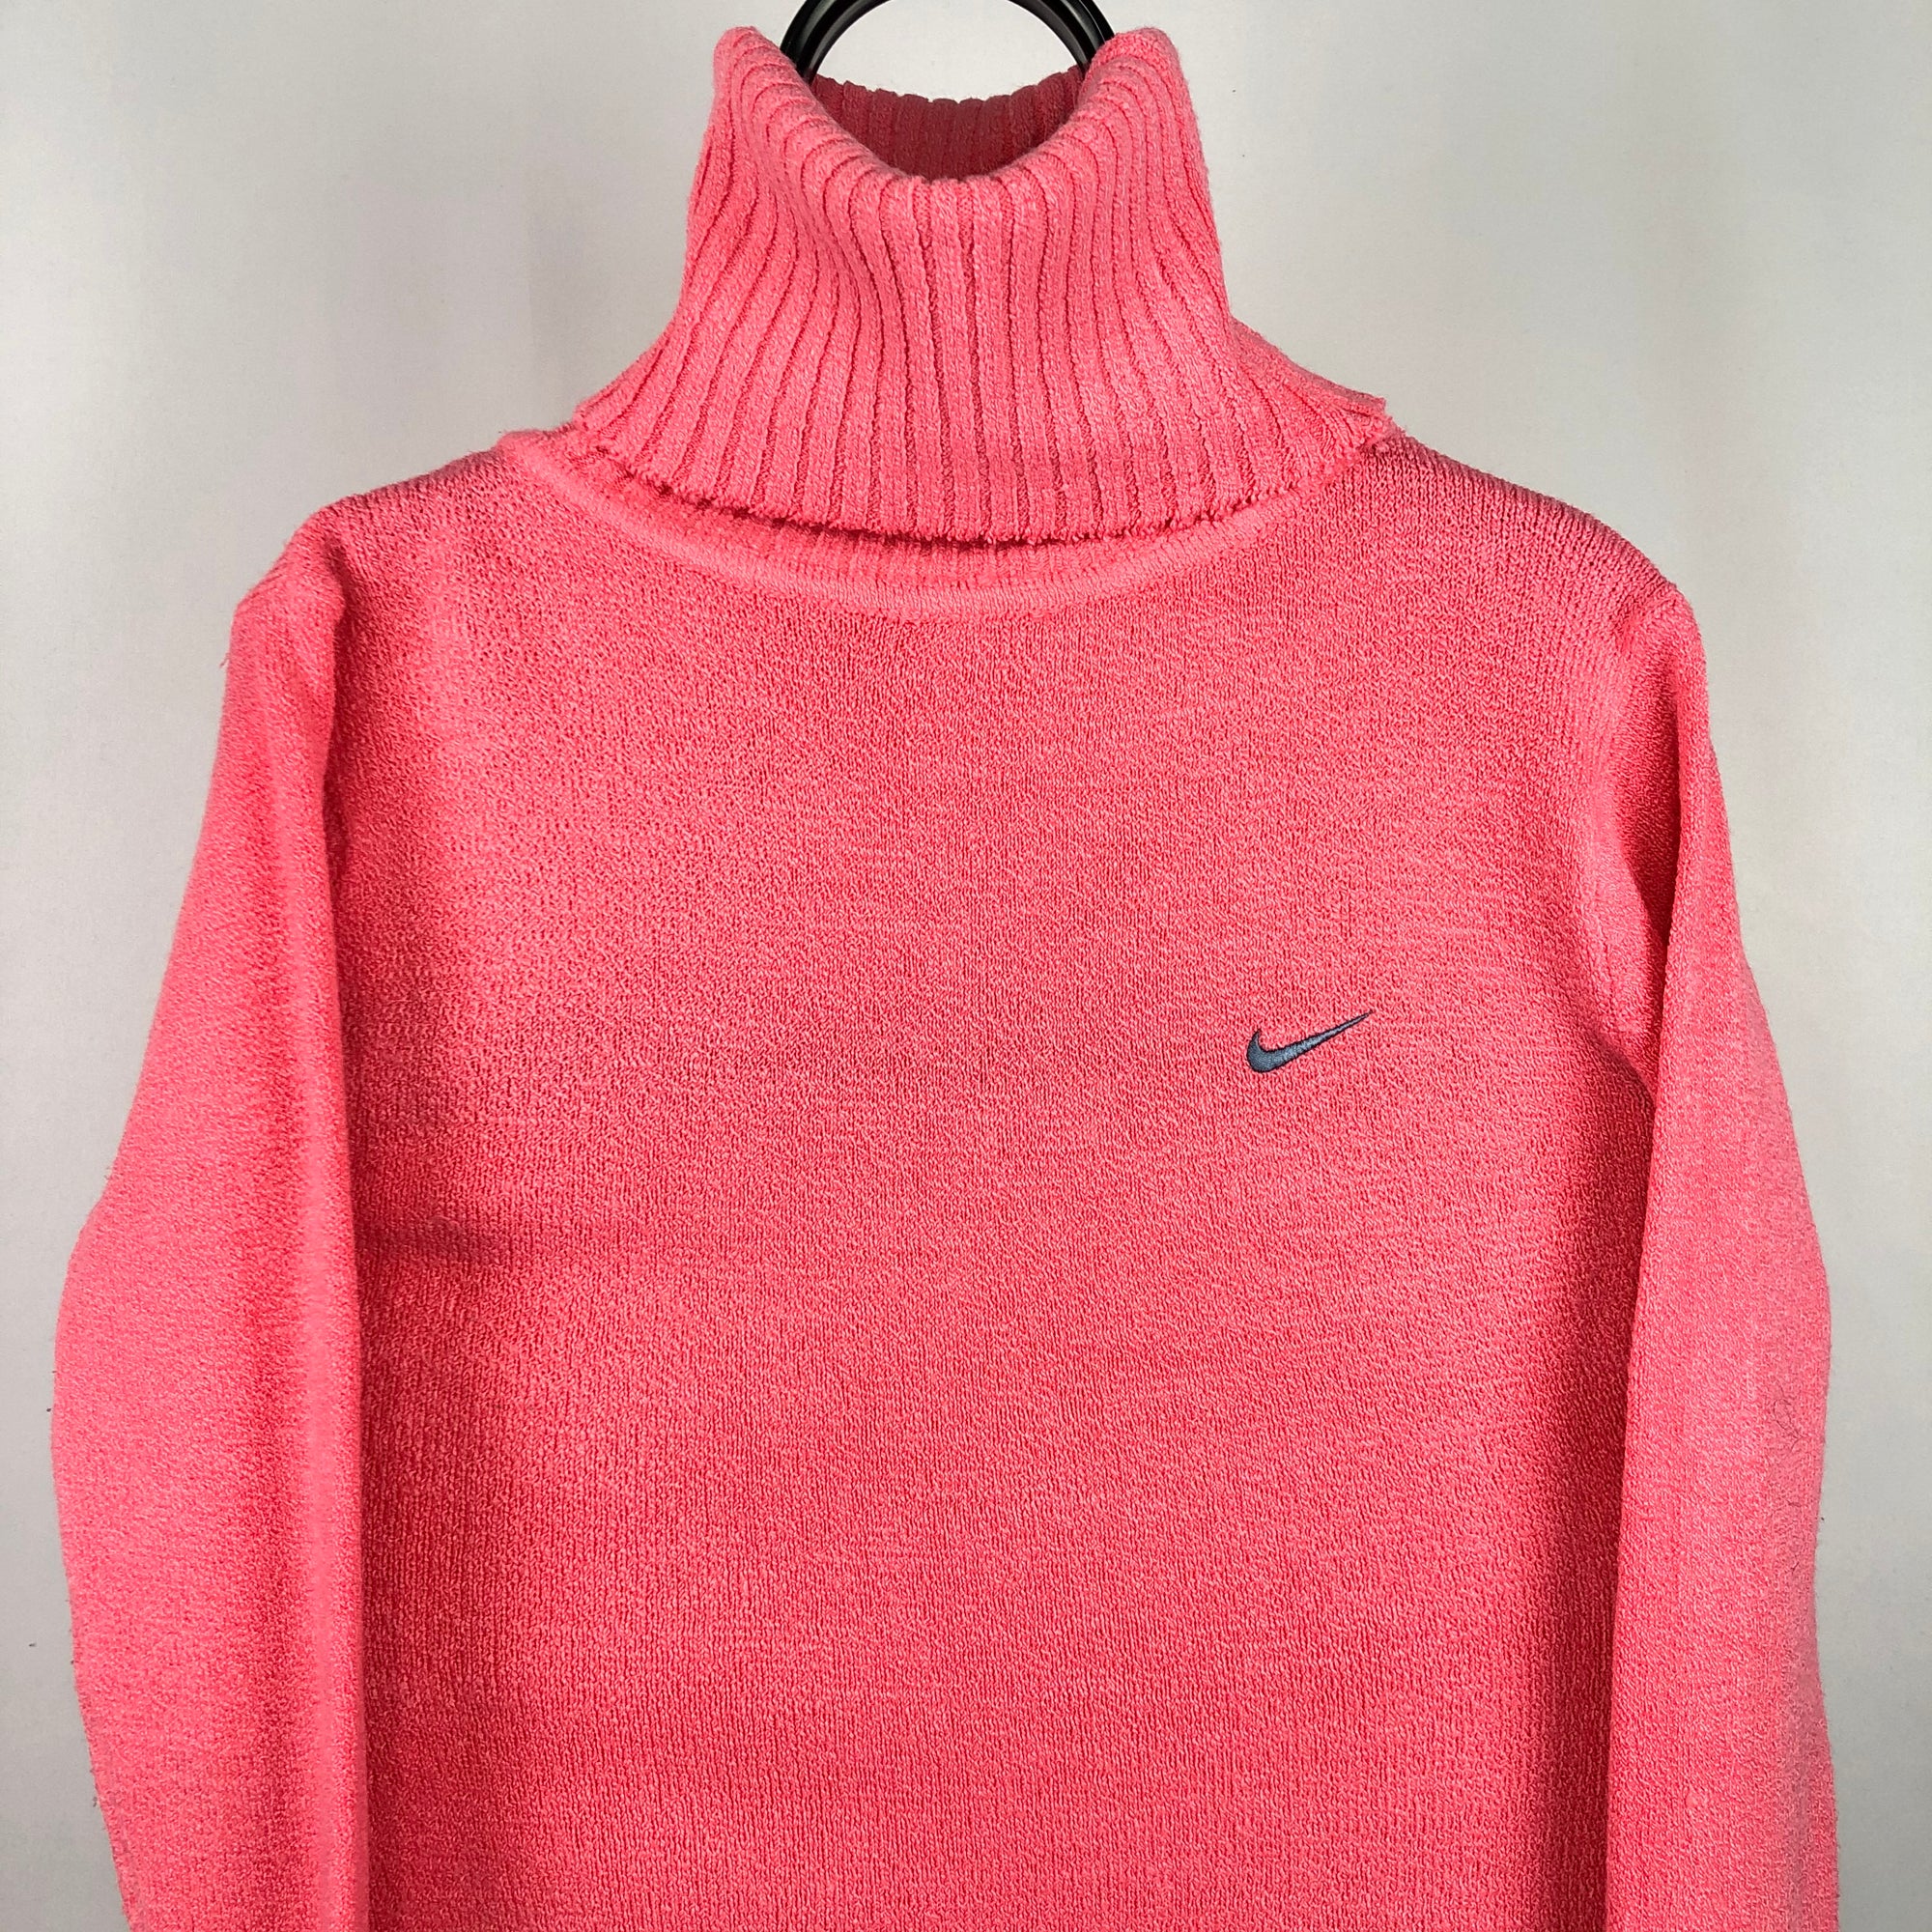 Vintage Nike Roll Neck Jumper in Pink - Men's Small/Women's Medium